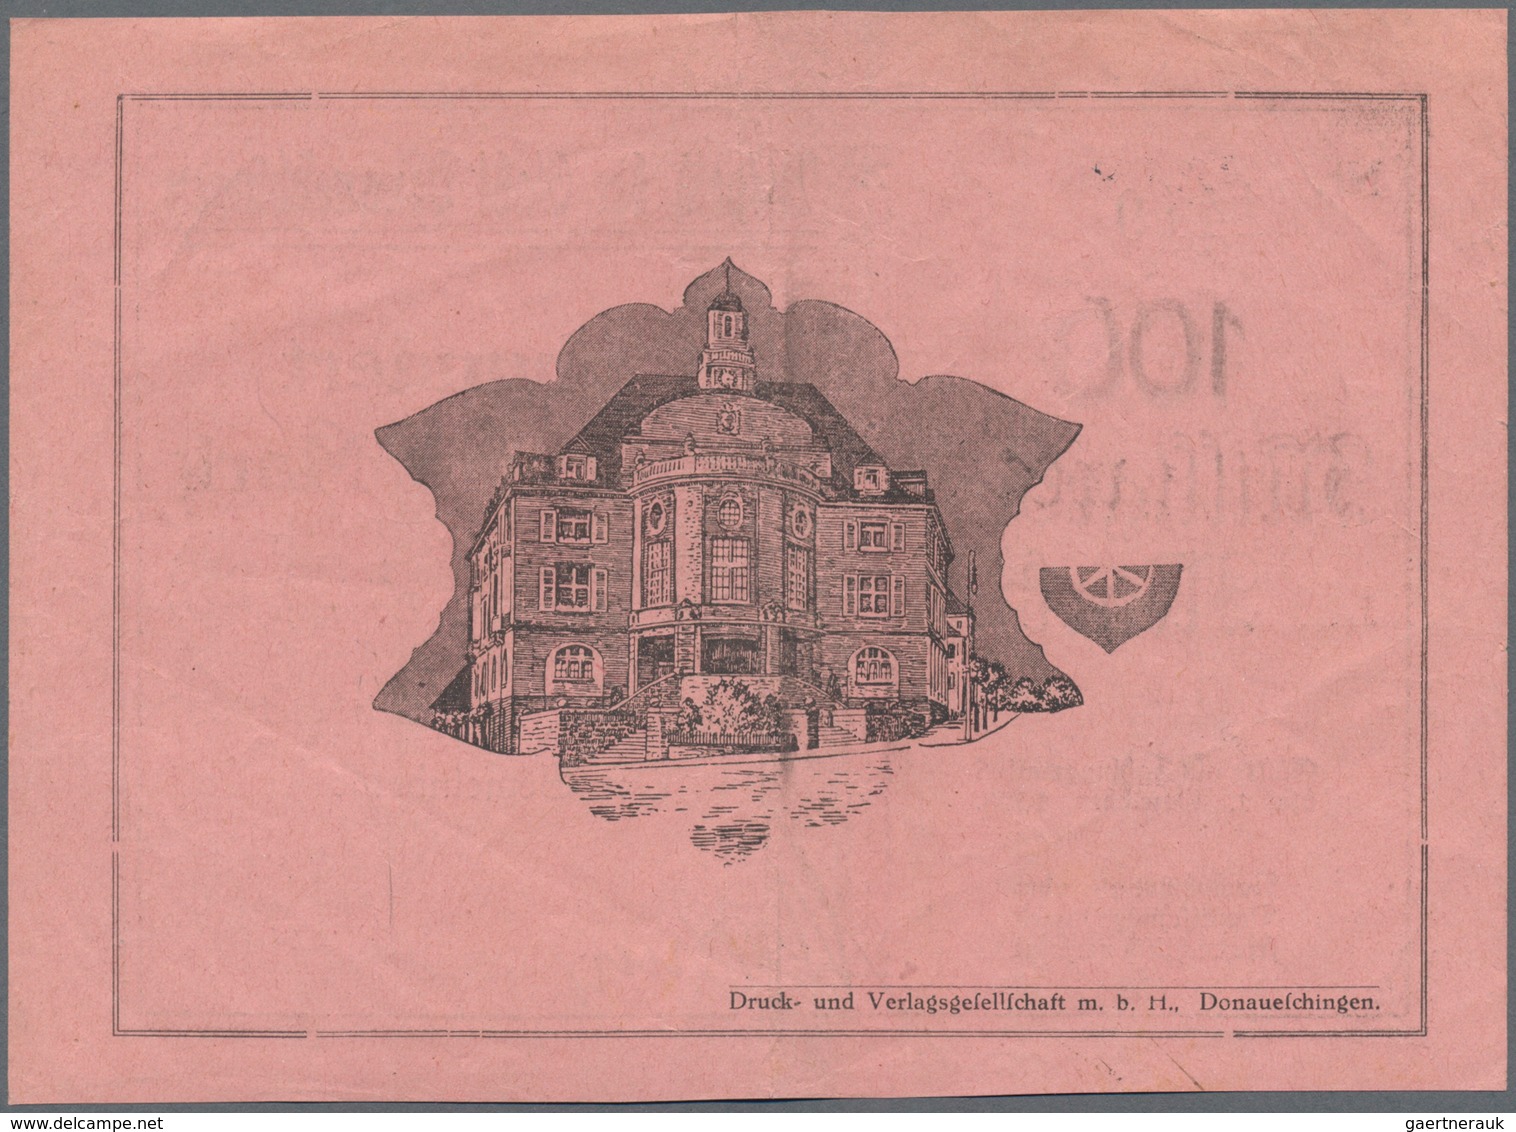 Deutschland - Notgeld - Baden: Donaueschingen, Stadt, 1, 5 (Papier rosa), 10, 20 (2, Druck schwarz b